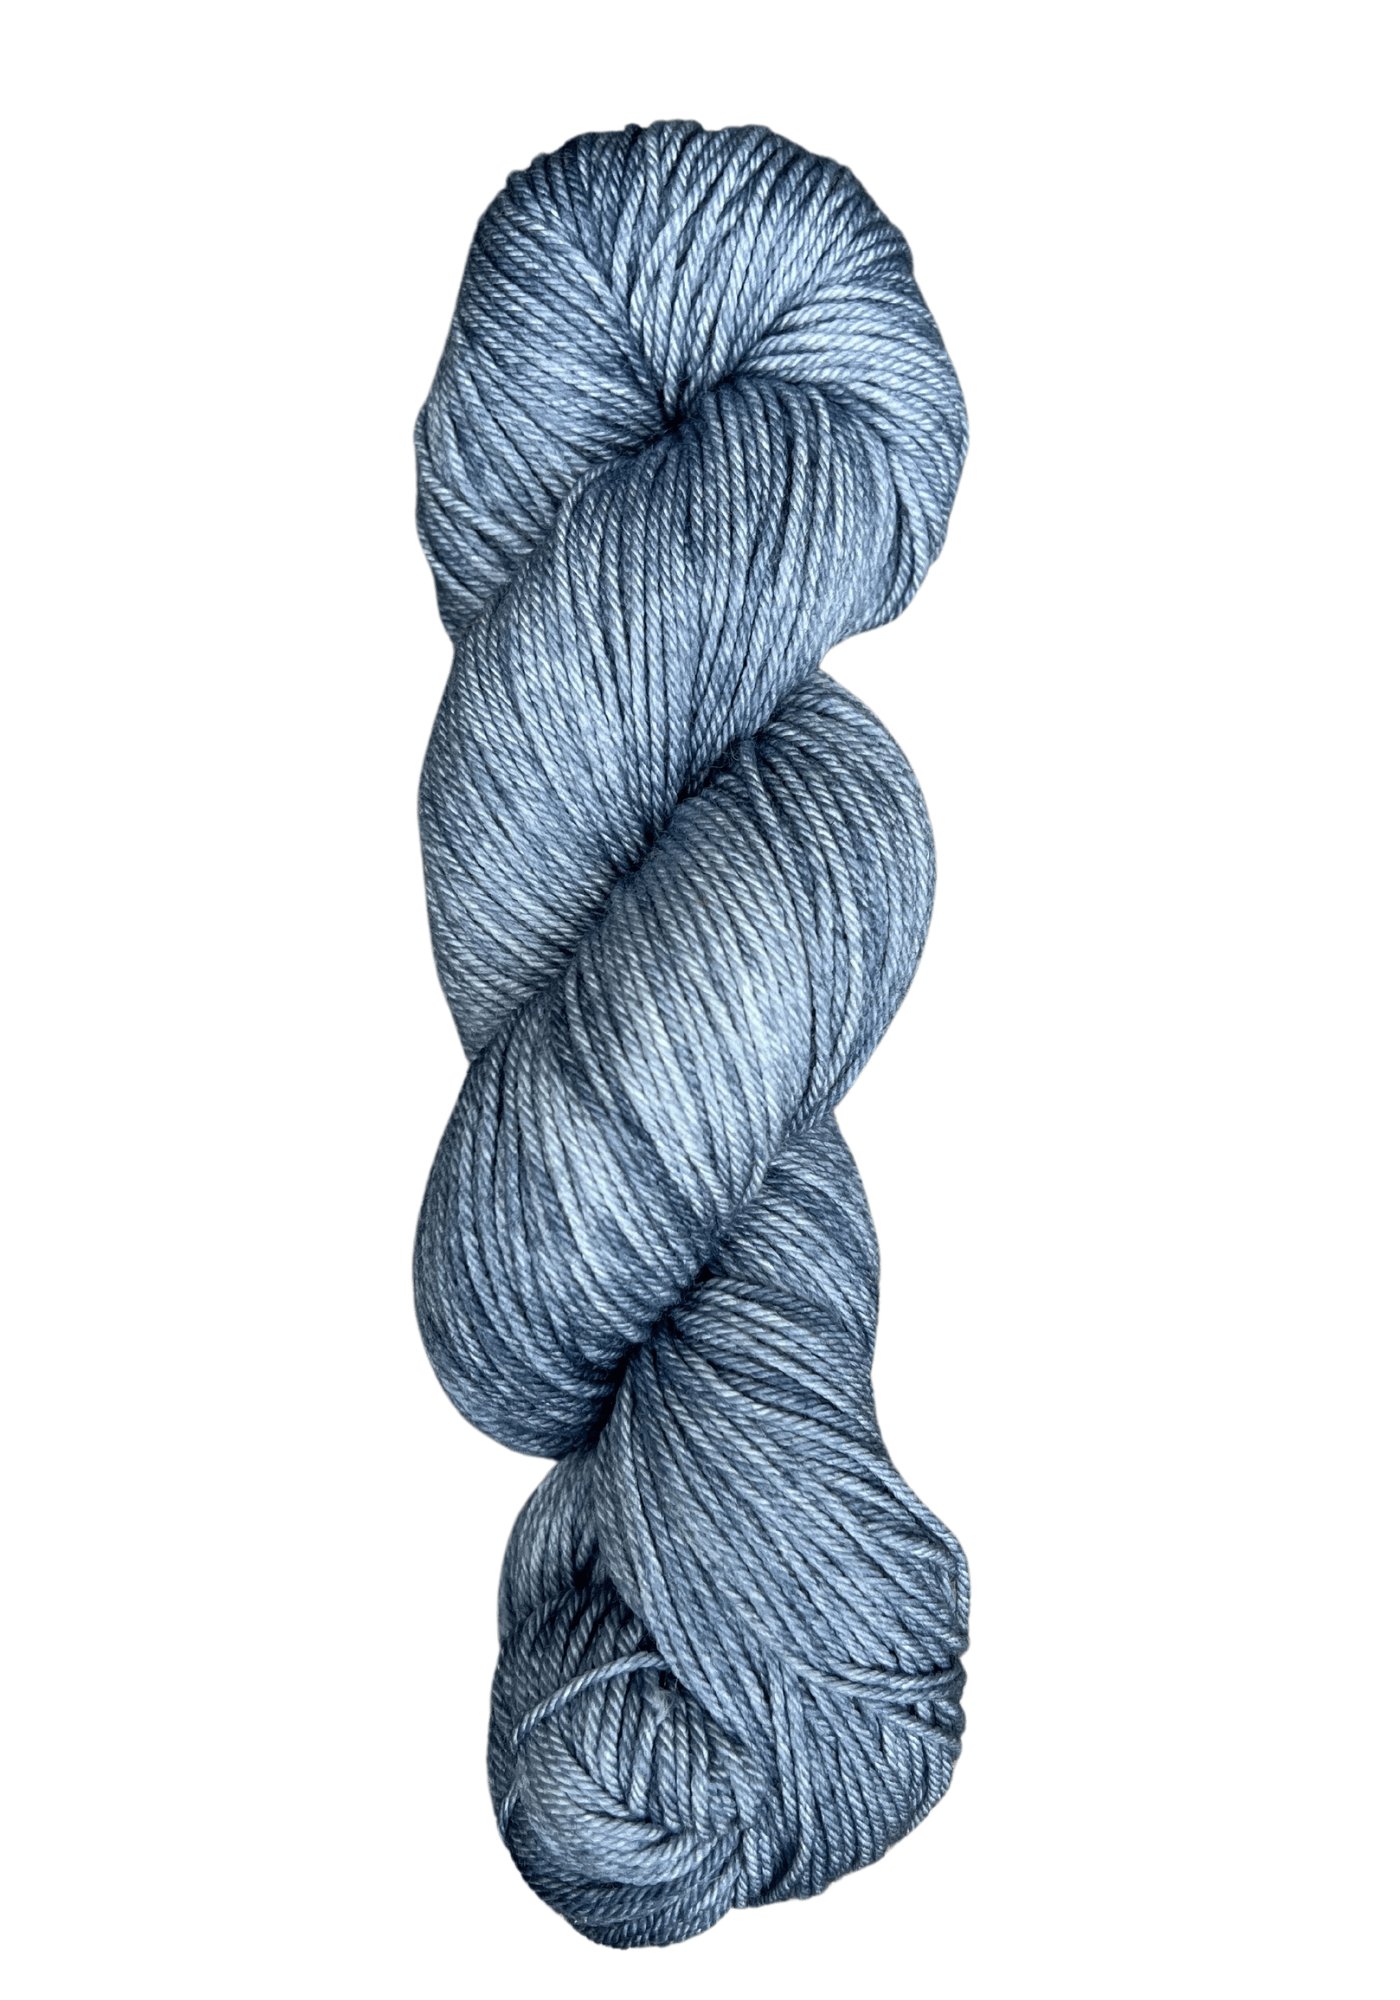 Incatops Merino Sock Gris azuloso 127-1